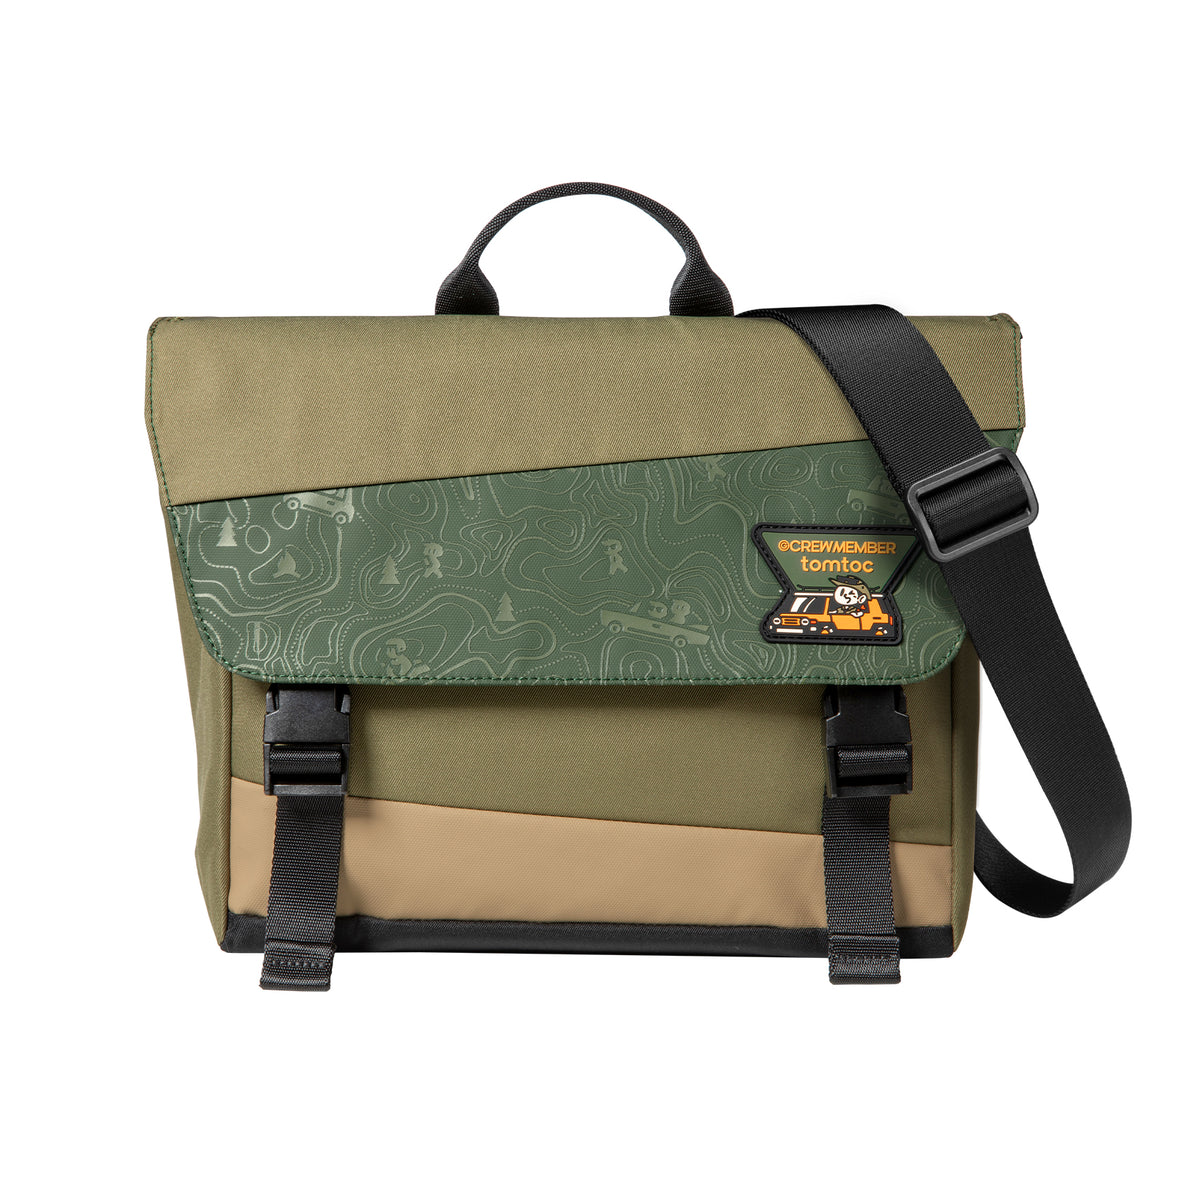 tomtoc G-Crew 11 Inch Water-Resistant Lightweight Casual Shoulder Bag / Messenger Bag / Small Satchel Bag - Green